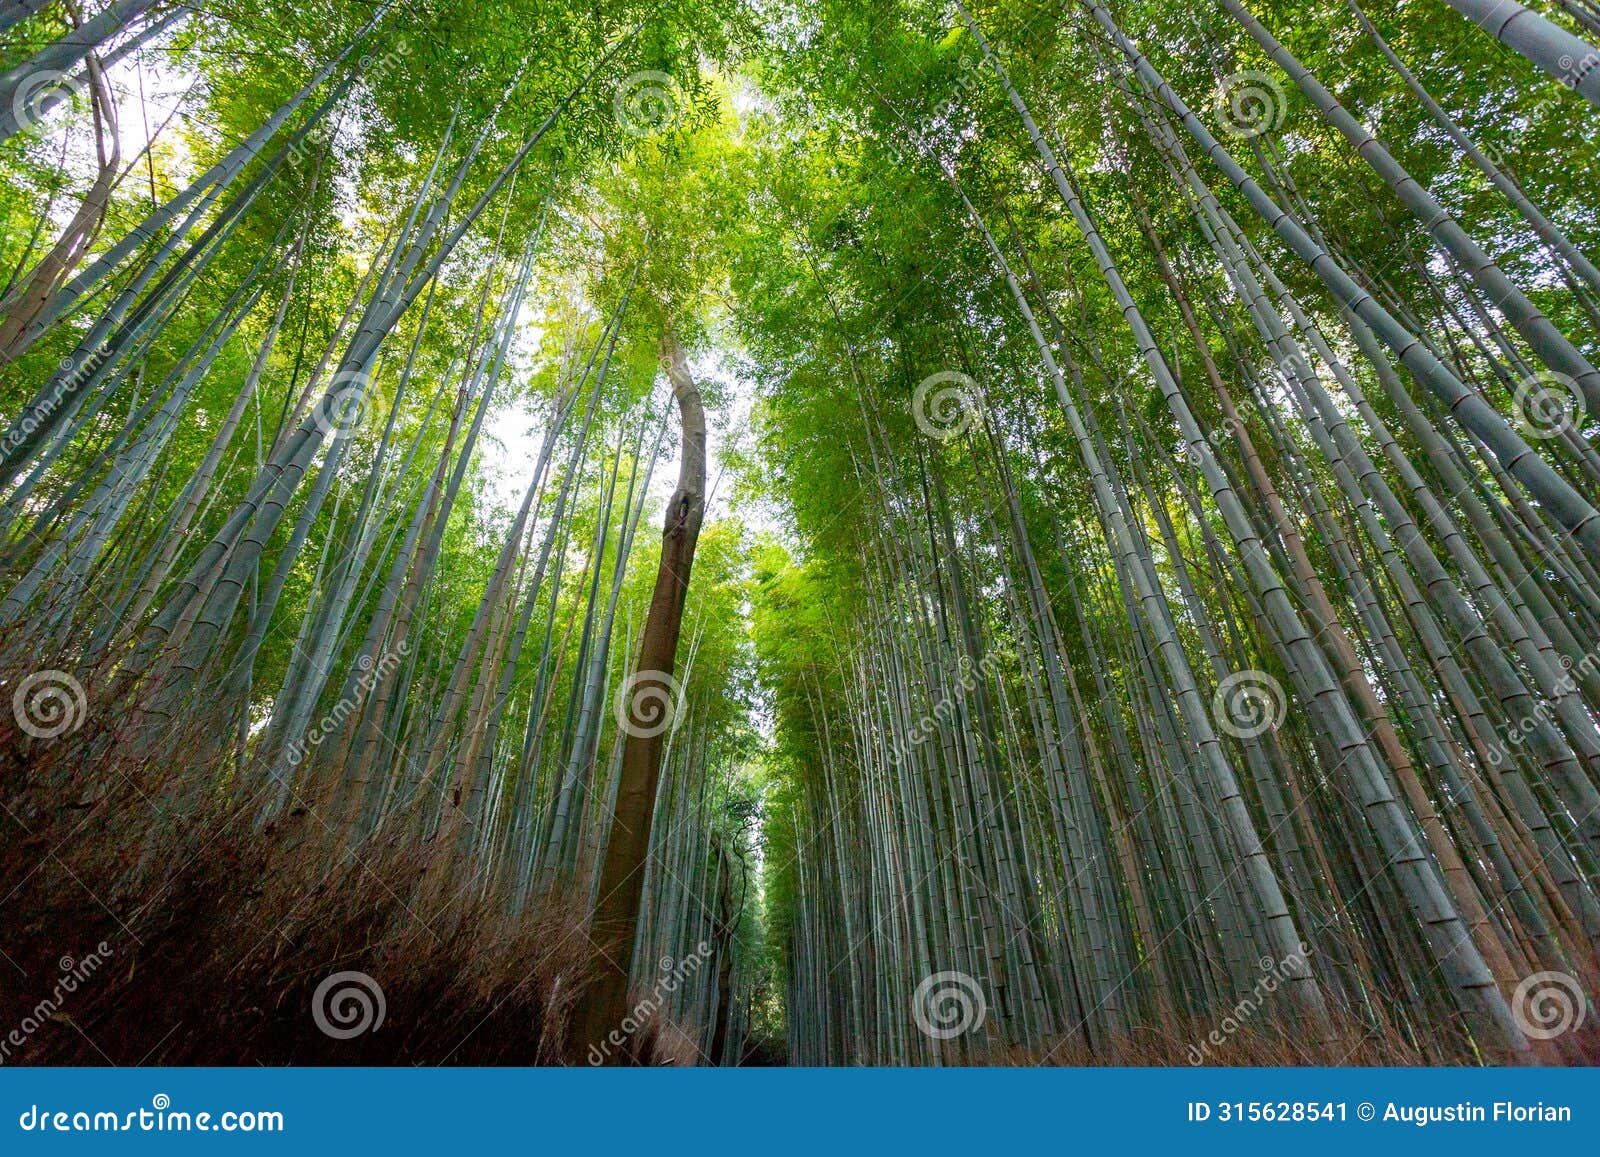 arashiyama bamboo forest, kyoto, japan